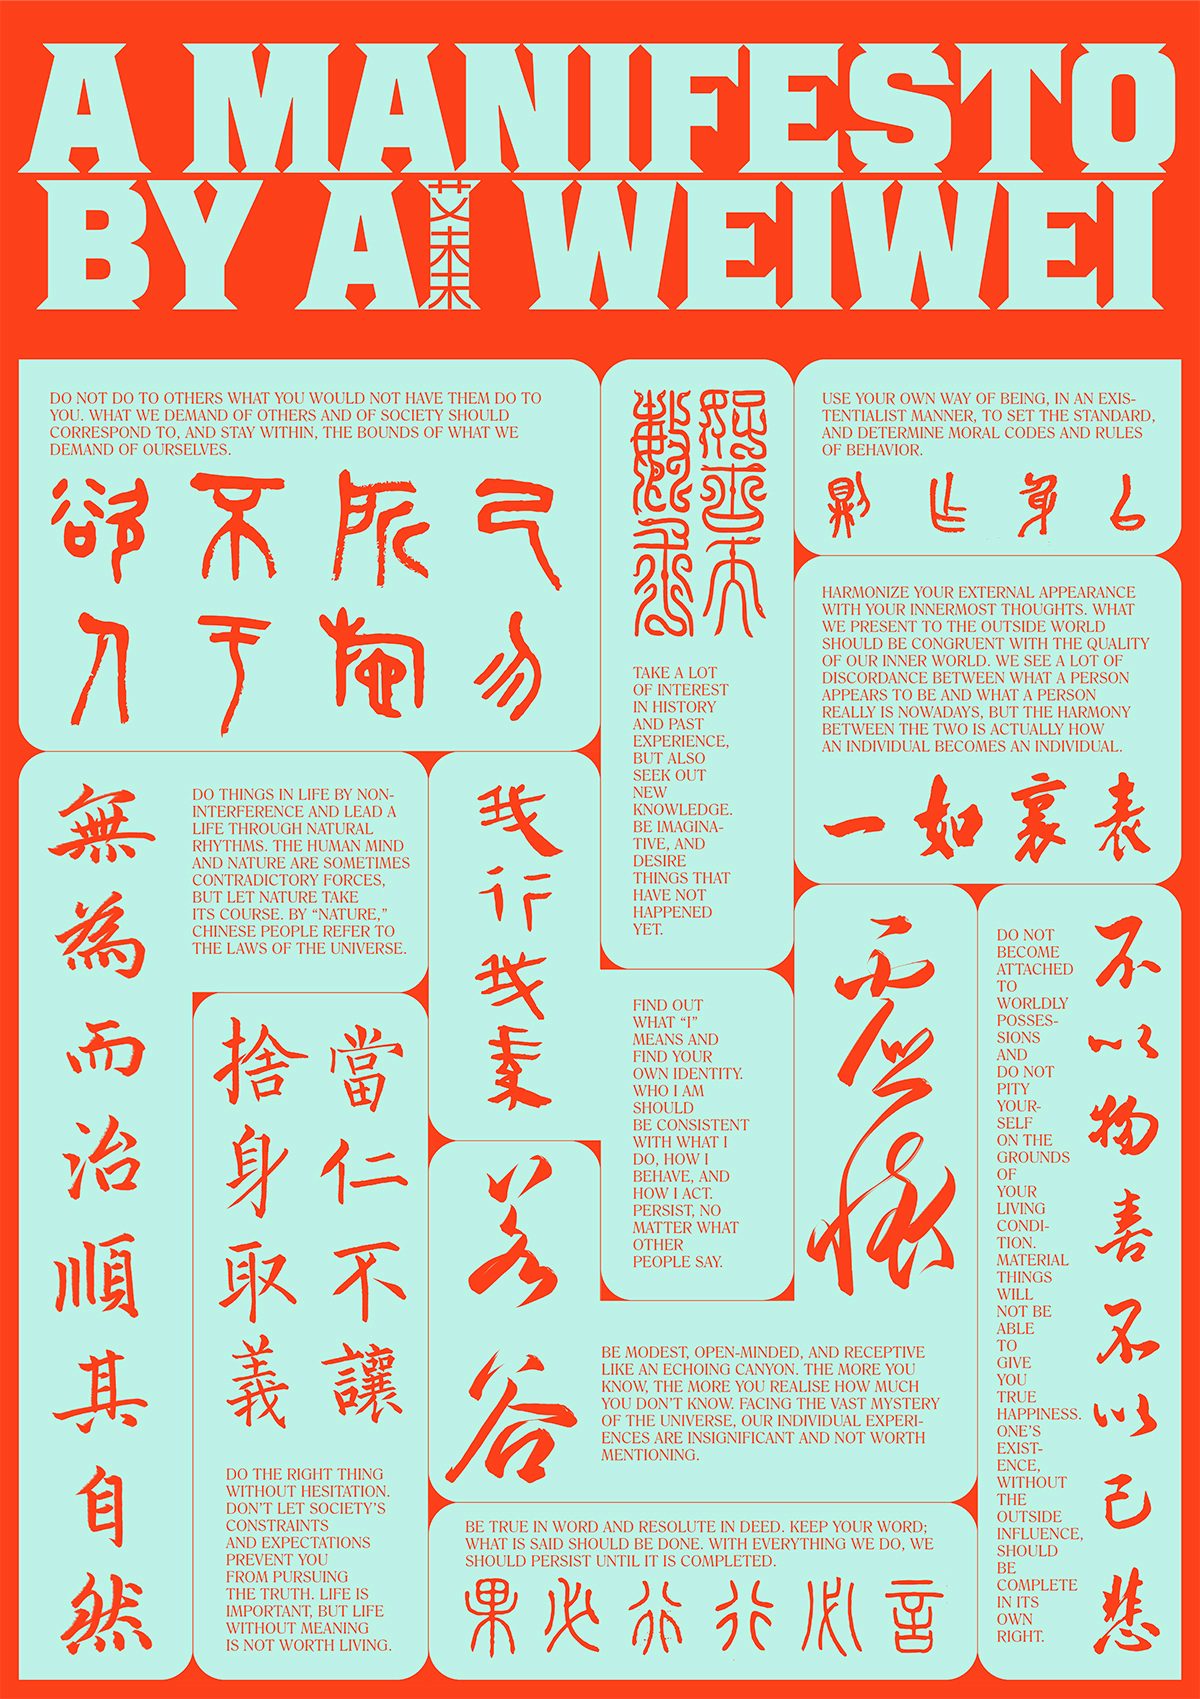 Image of Ai Weiwei's Manifesto for WePresent